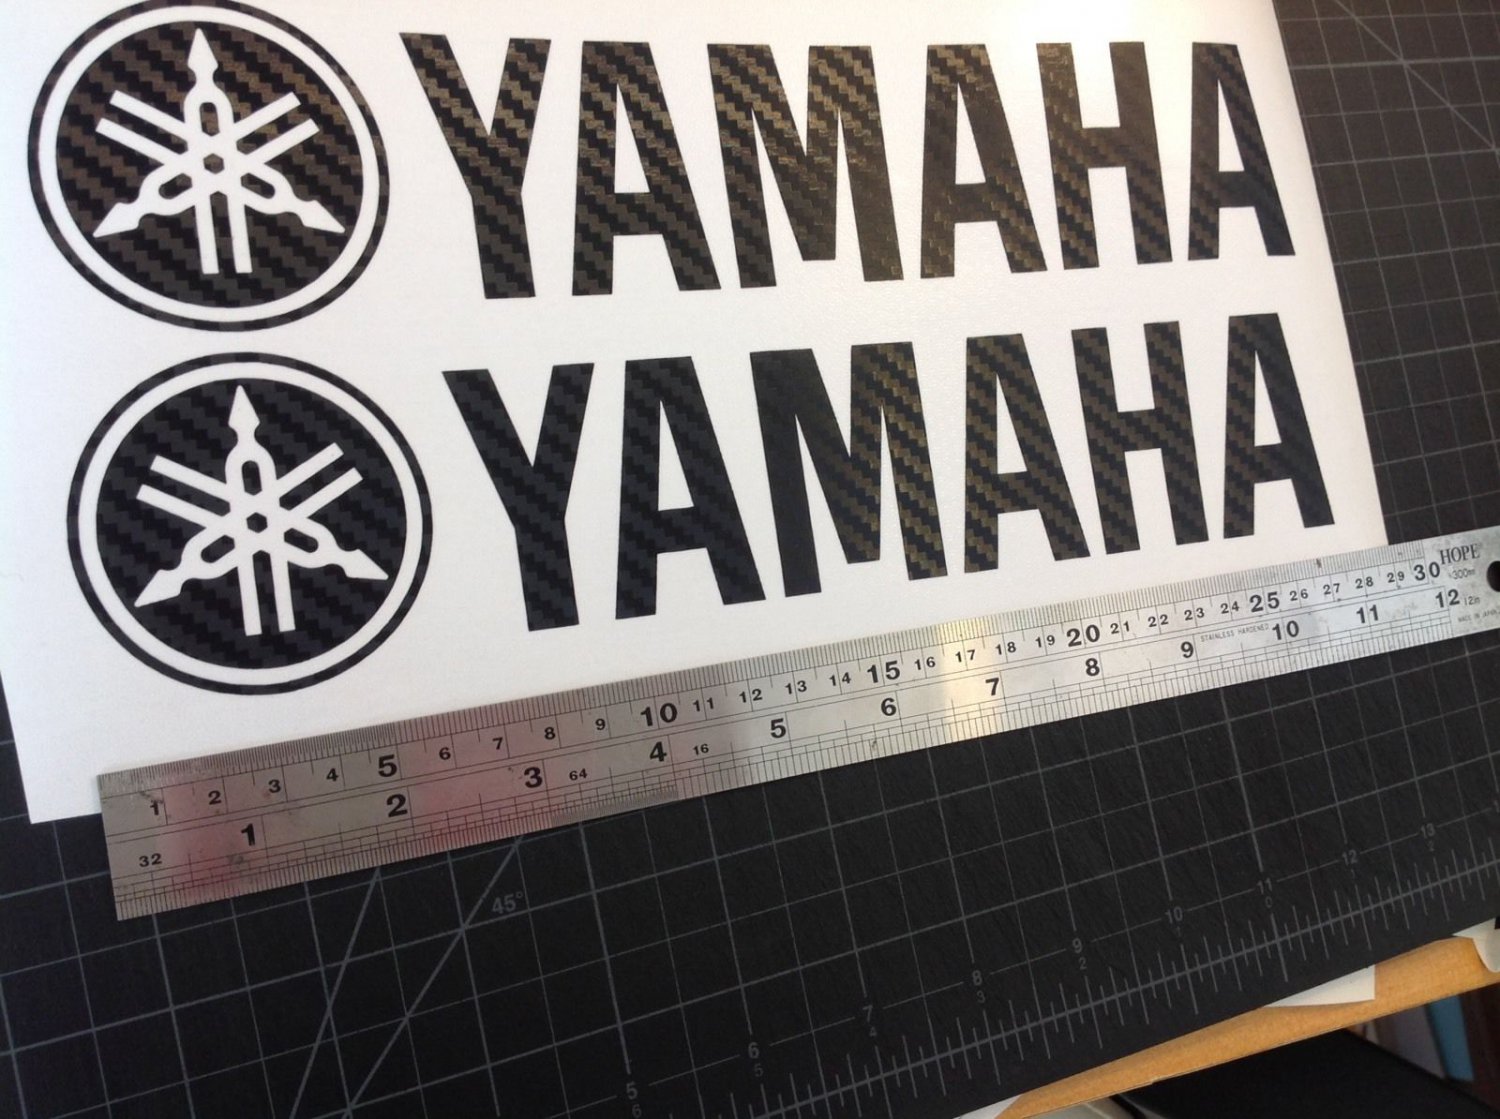  Yamaha  Motorcycle  2 Decals  Stickers  11 Vinyl Big Size 